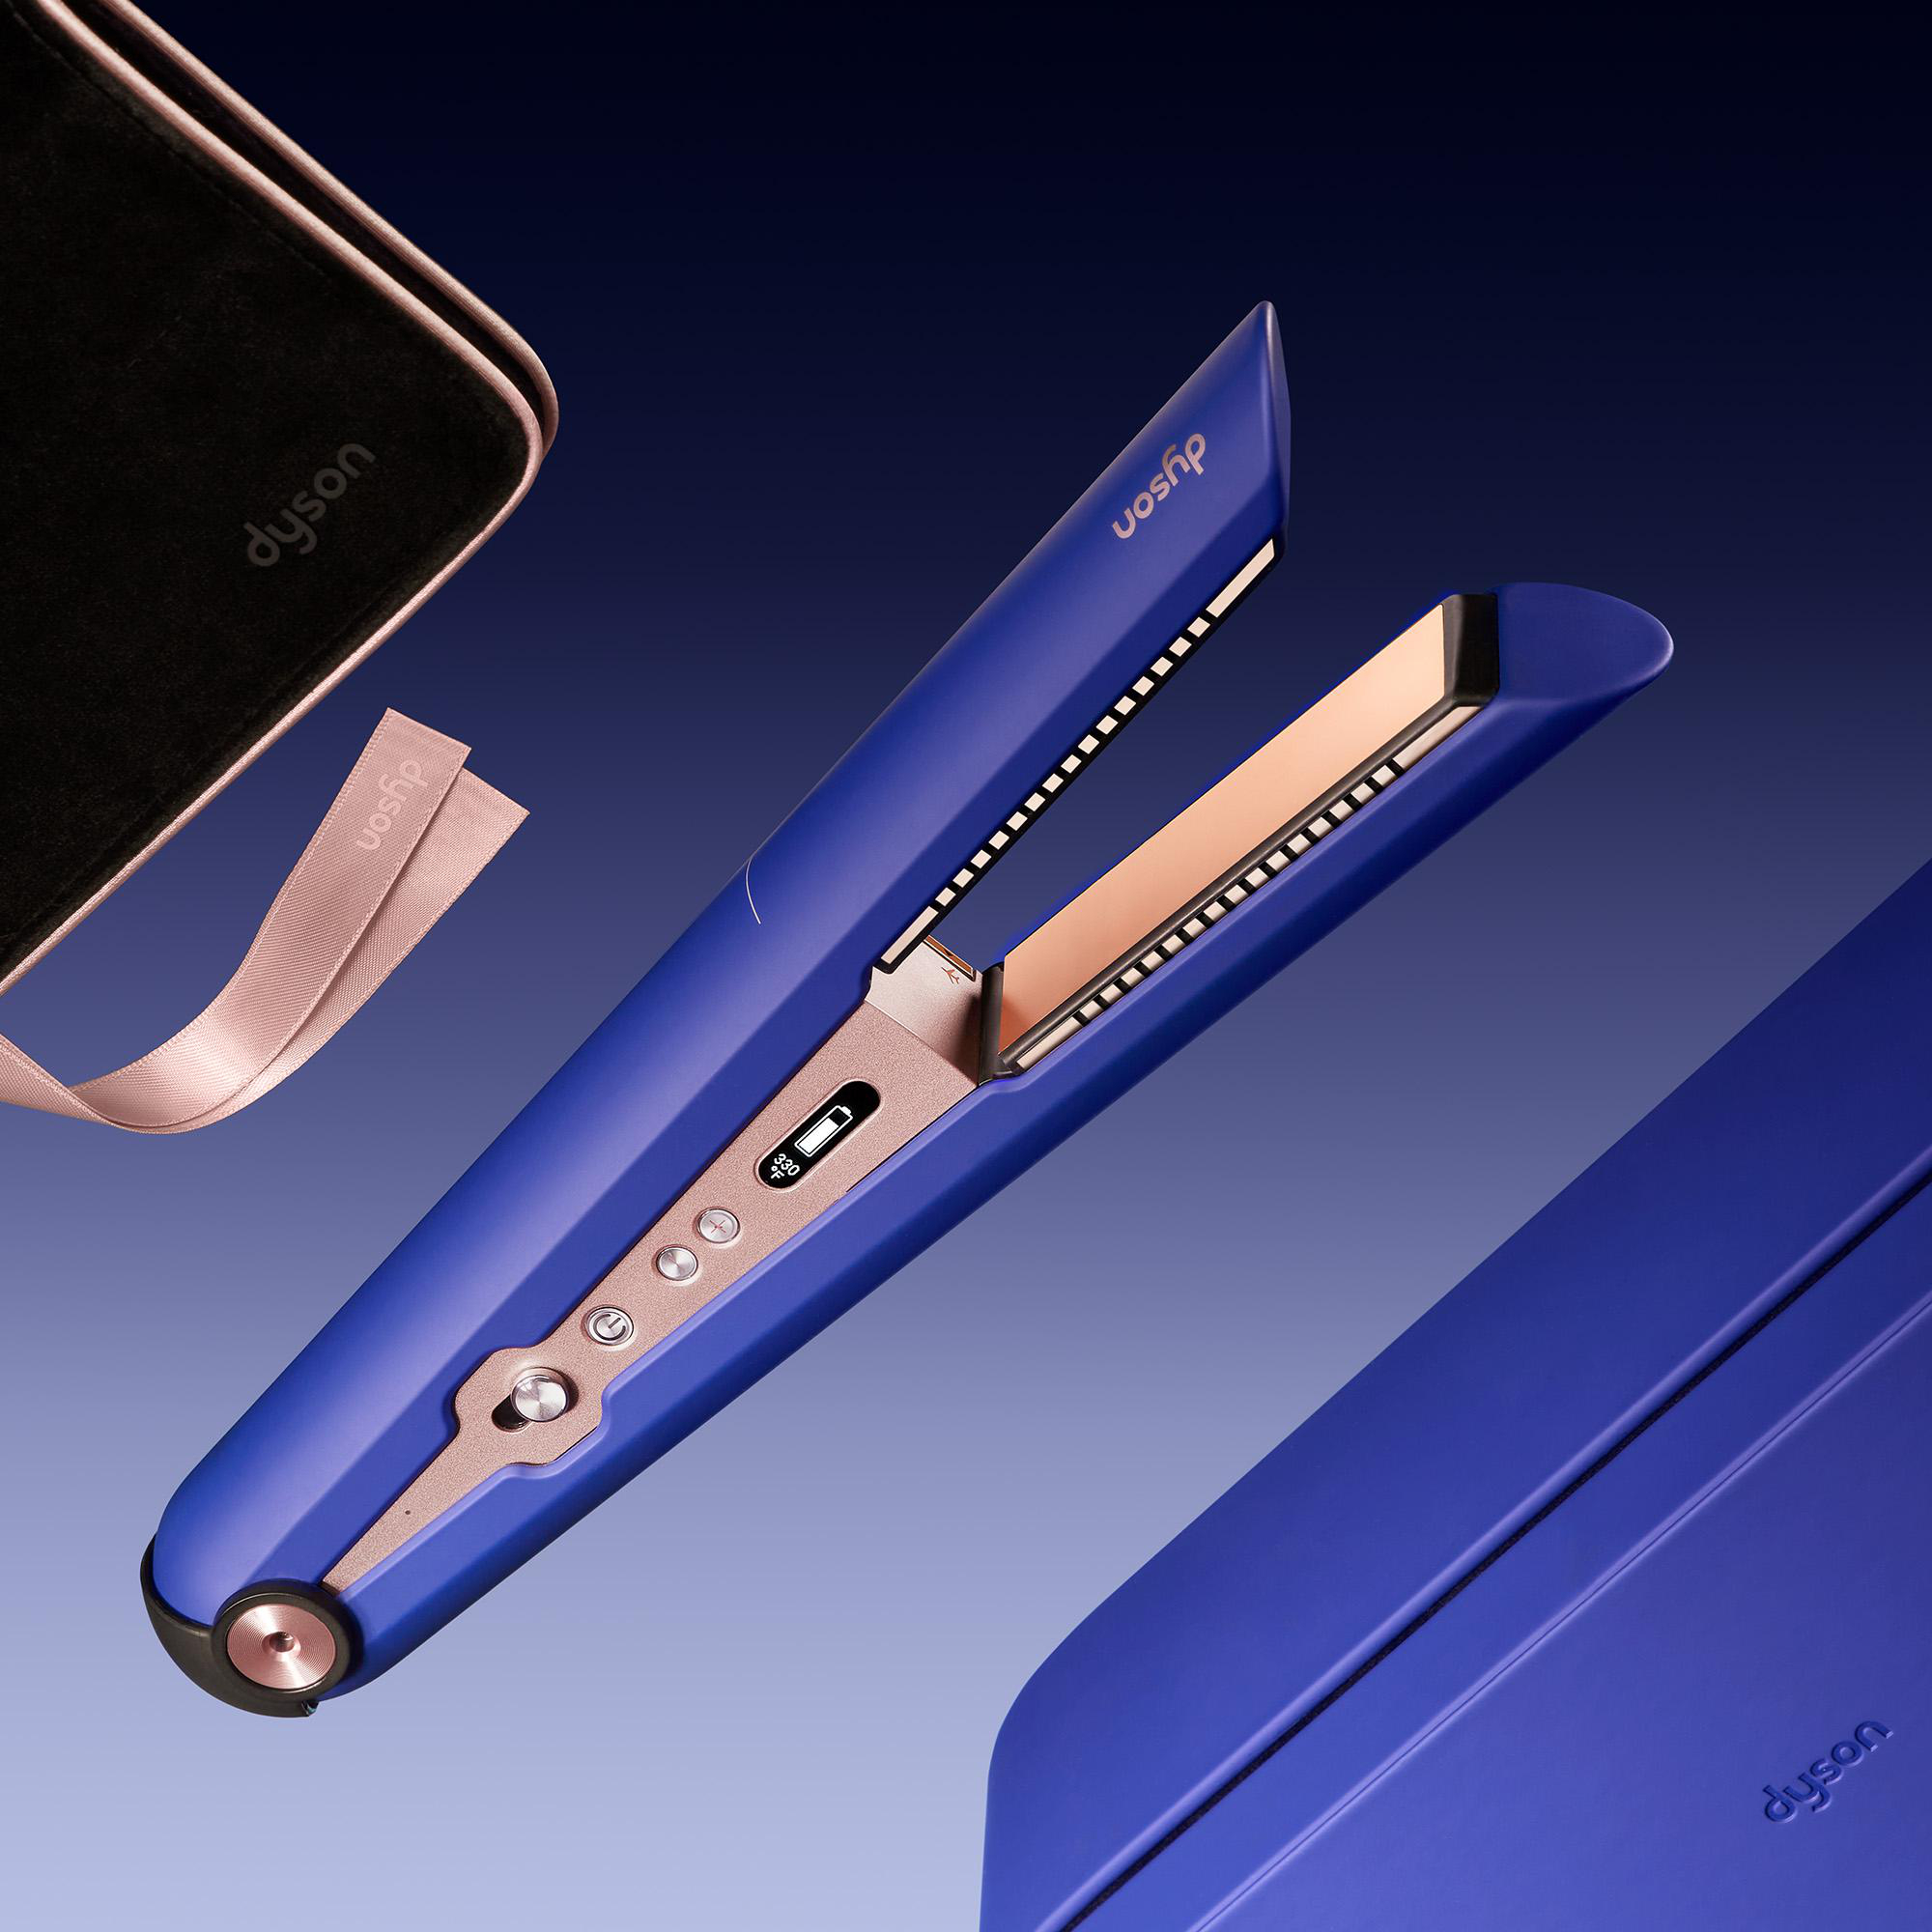 Haarglätter, Kupfer-Mangan Beschichtung: Violettblau/Rosé - Edition Corrale™ DYSON Gifting